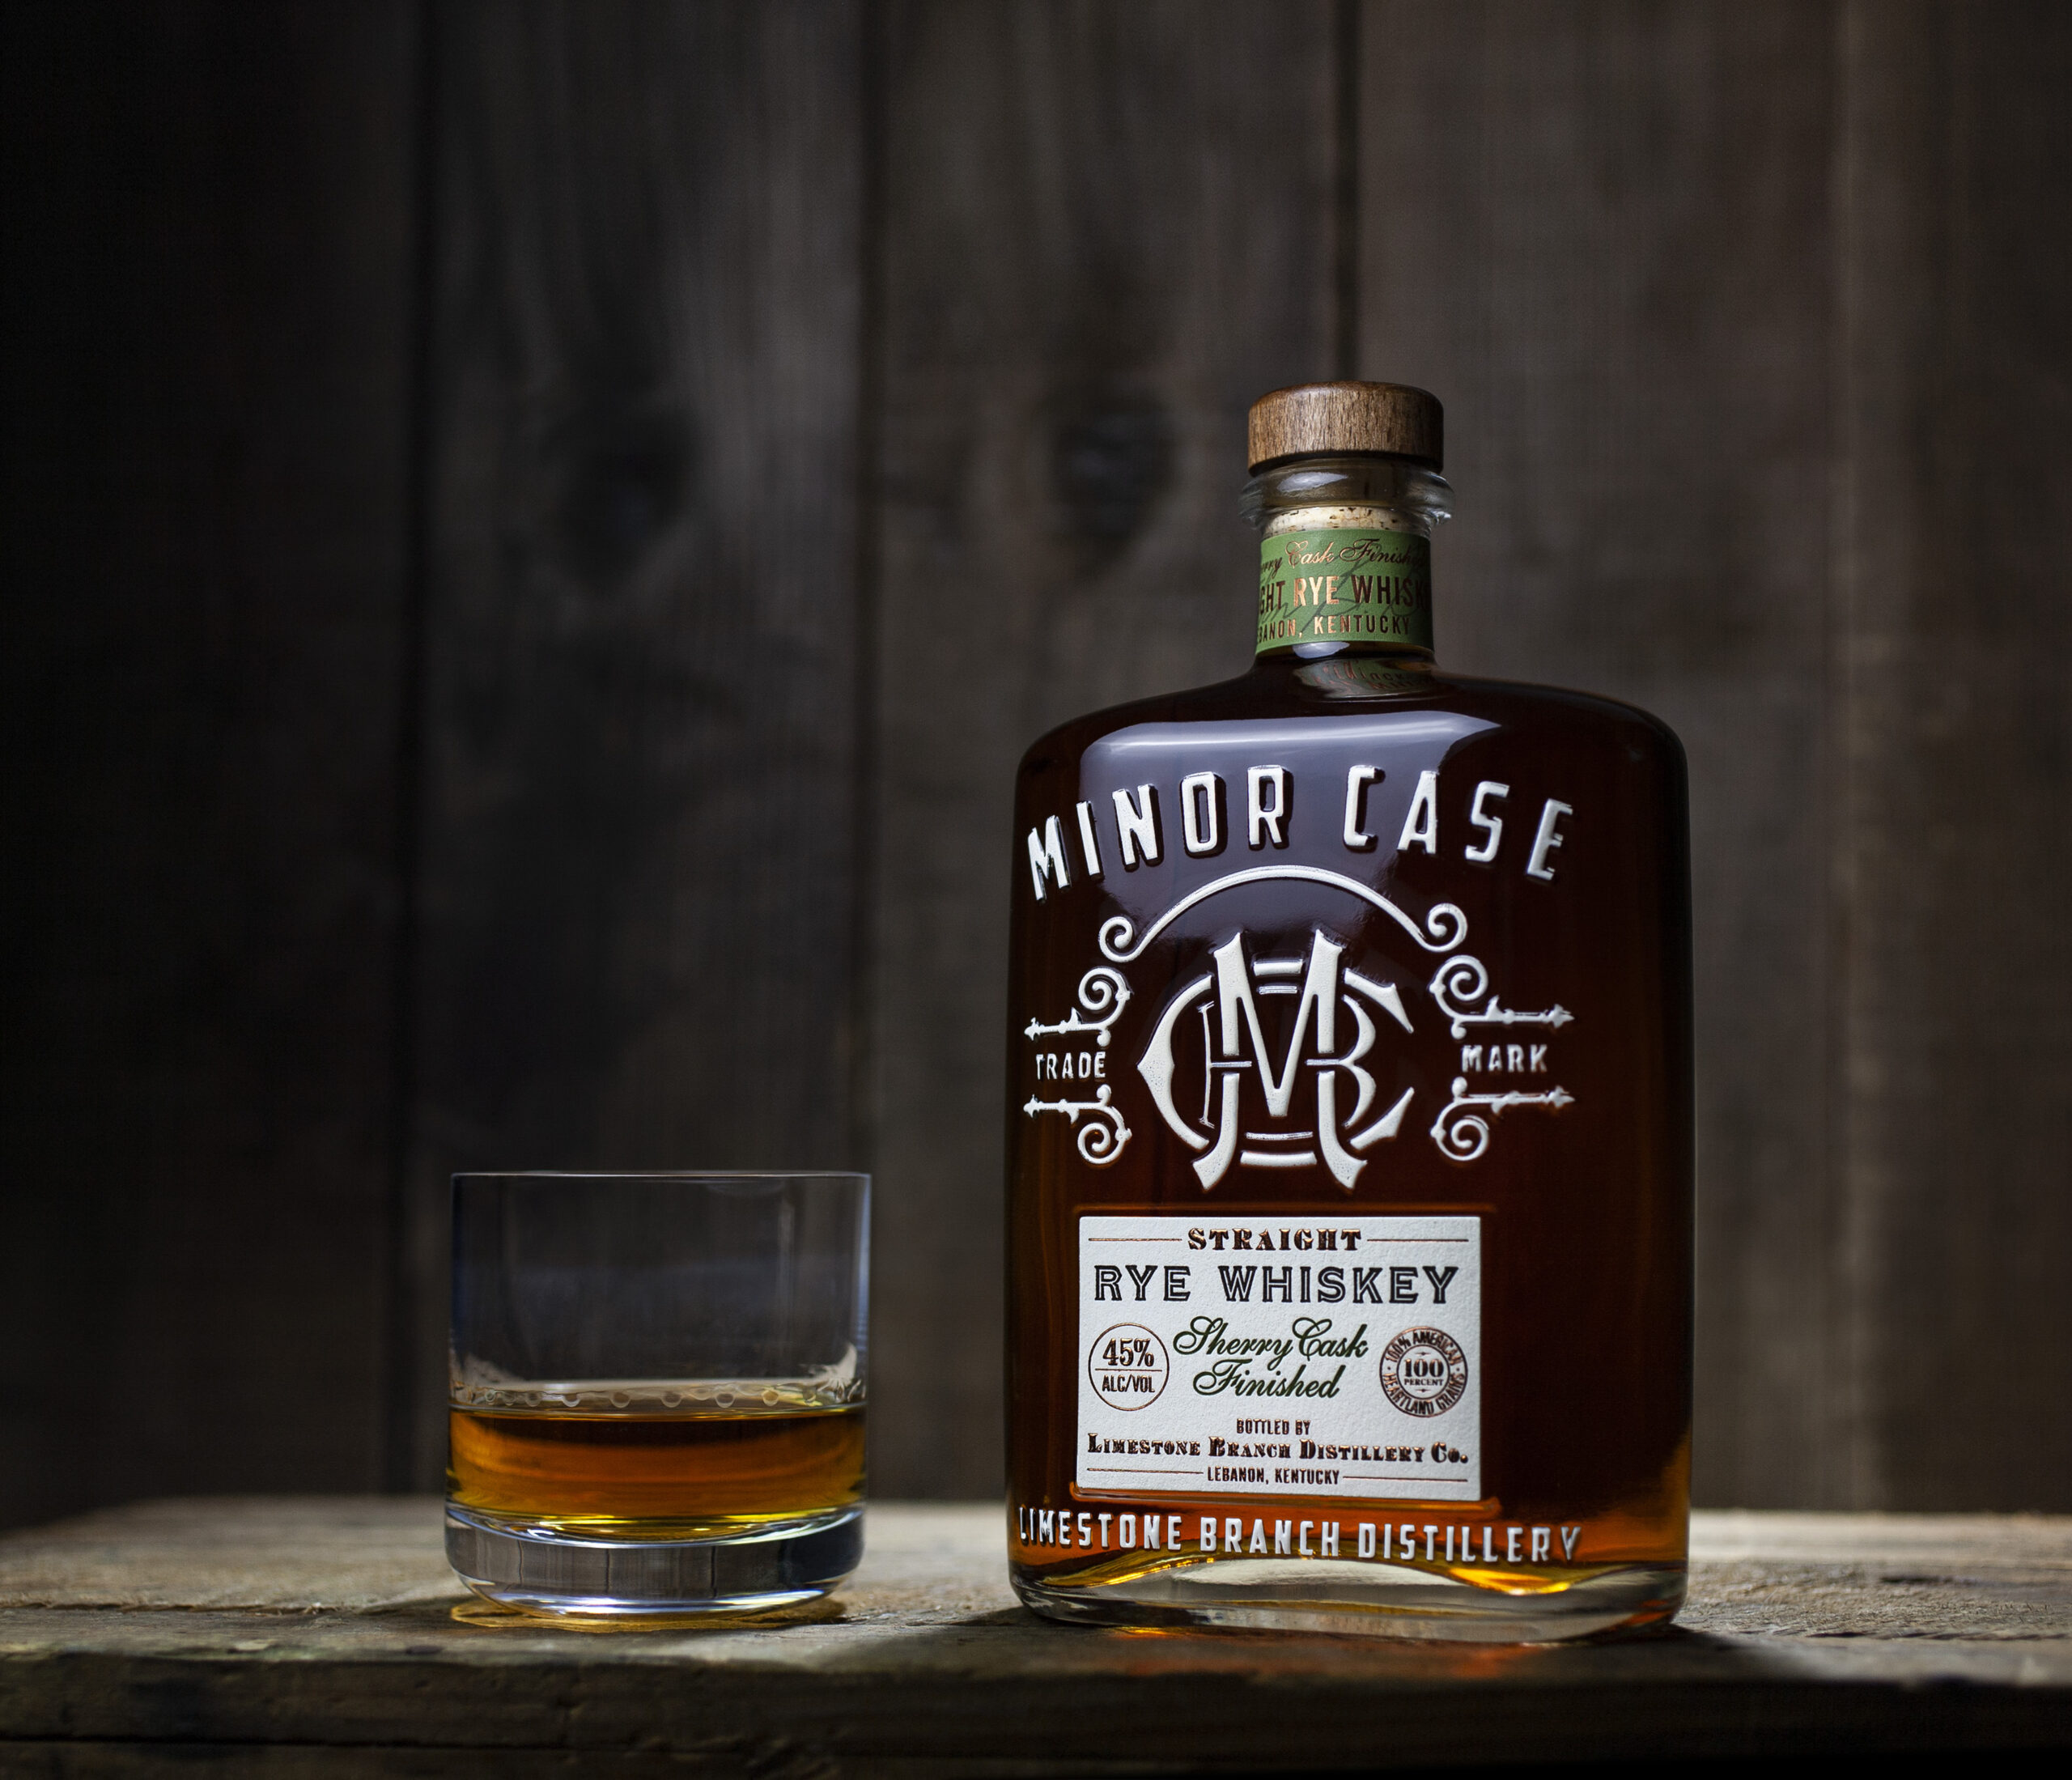 Bottle of Minor Case Rye Whiskey